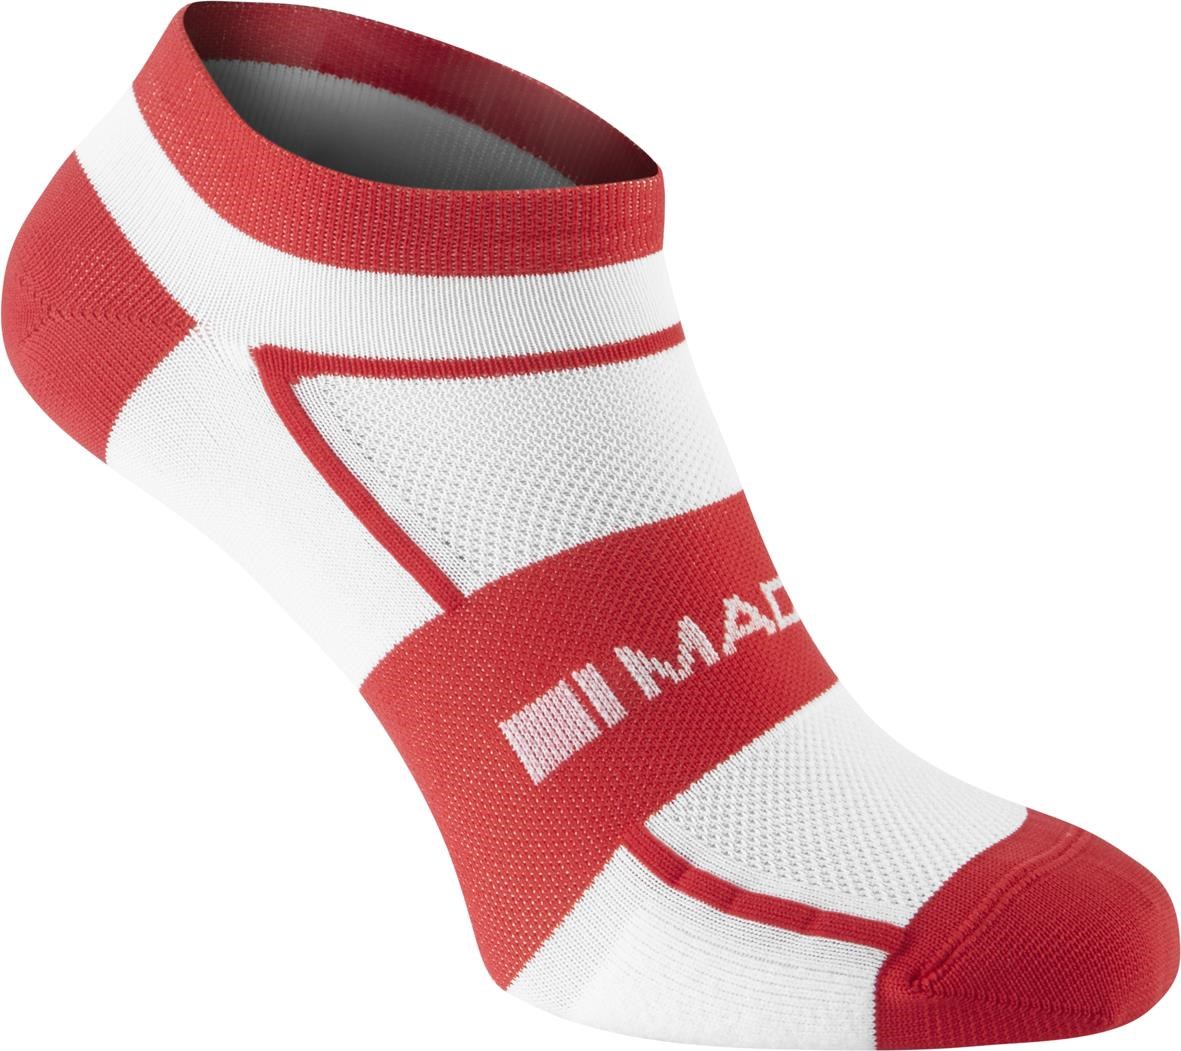 Madison Sportive Low Socks product image